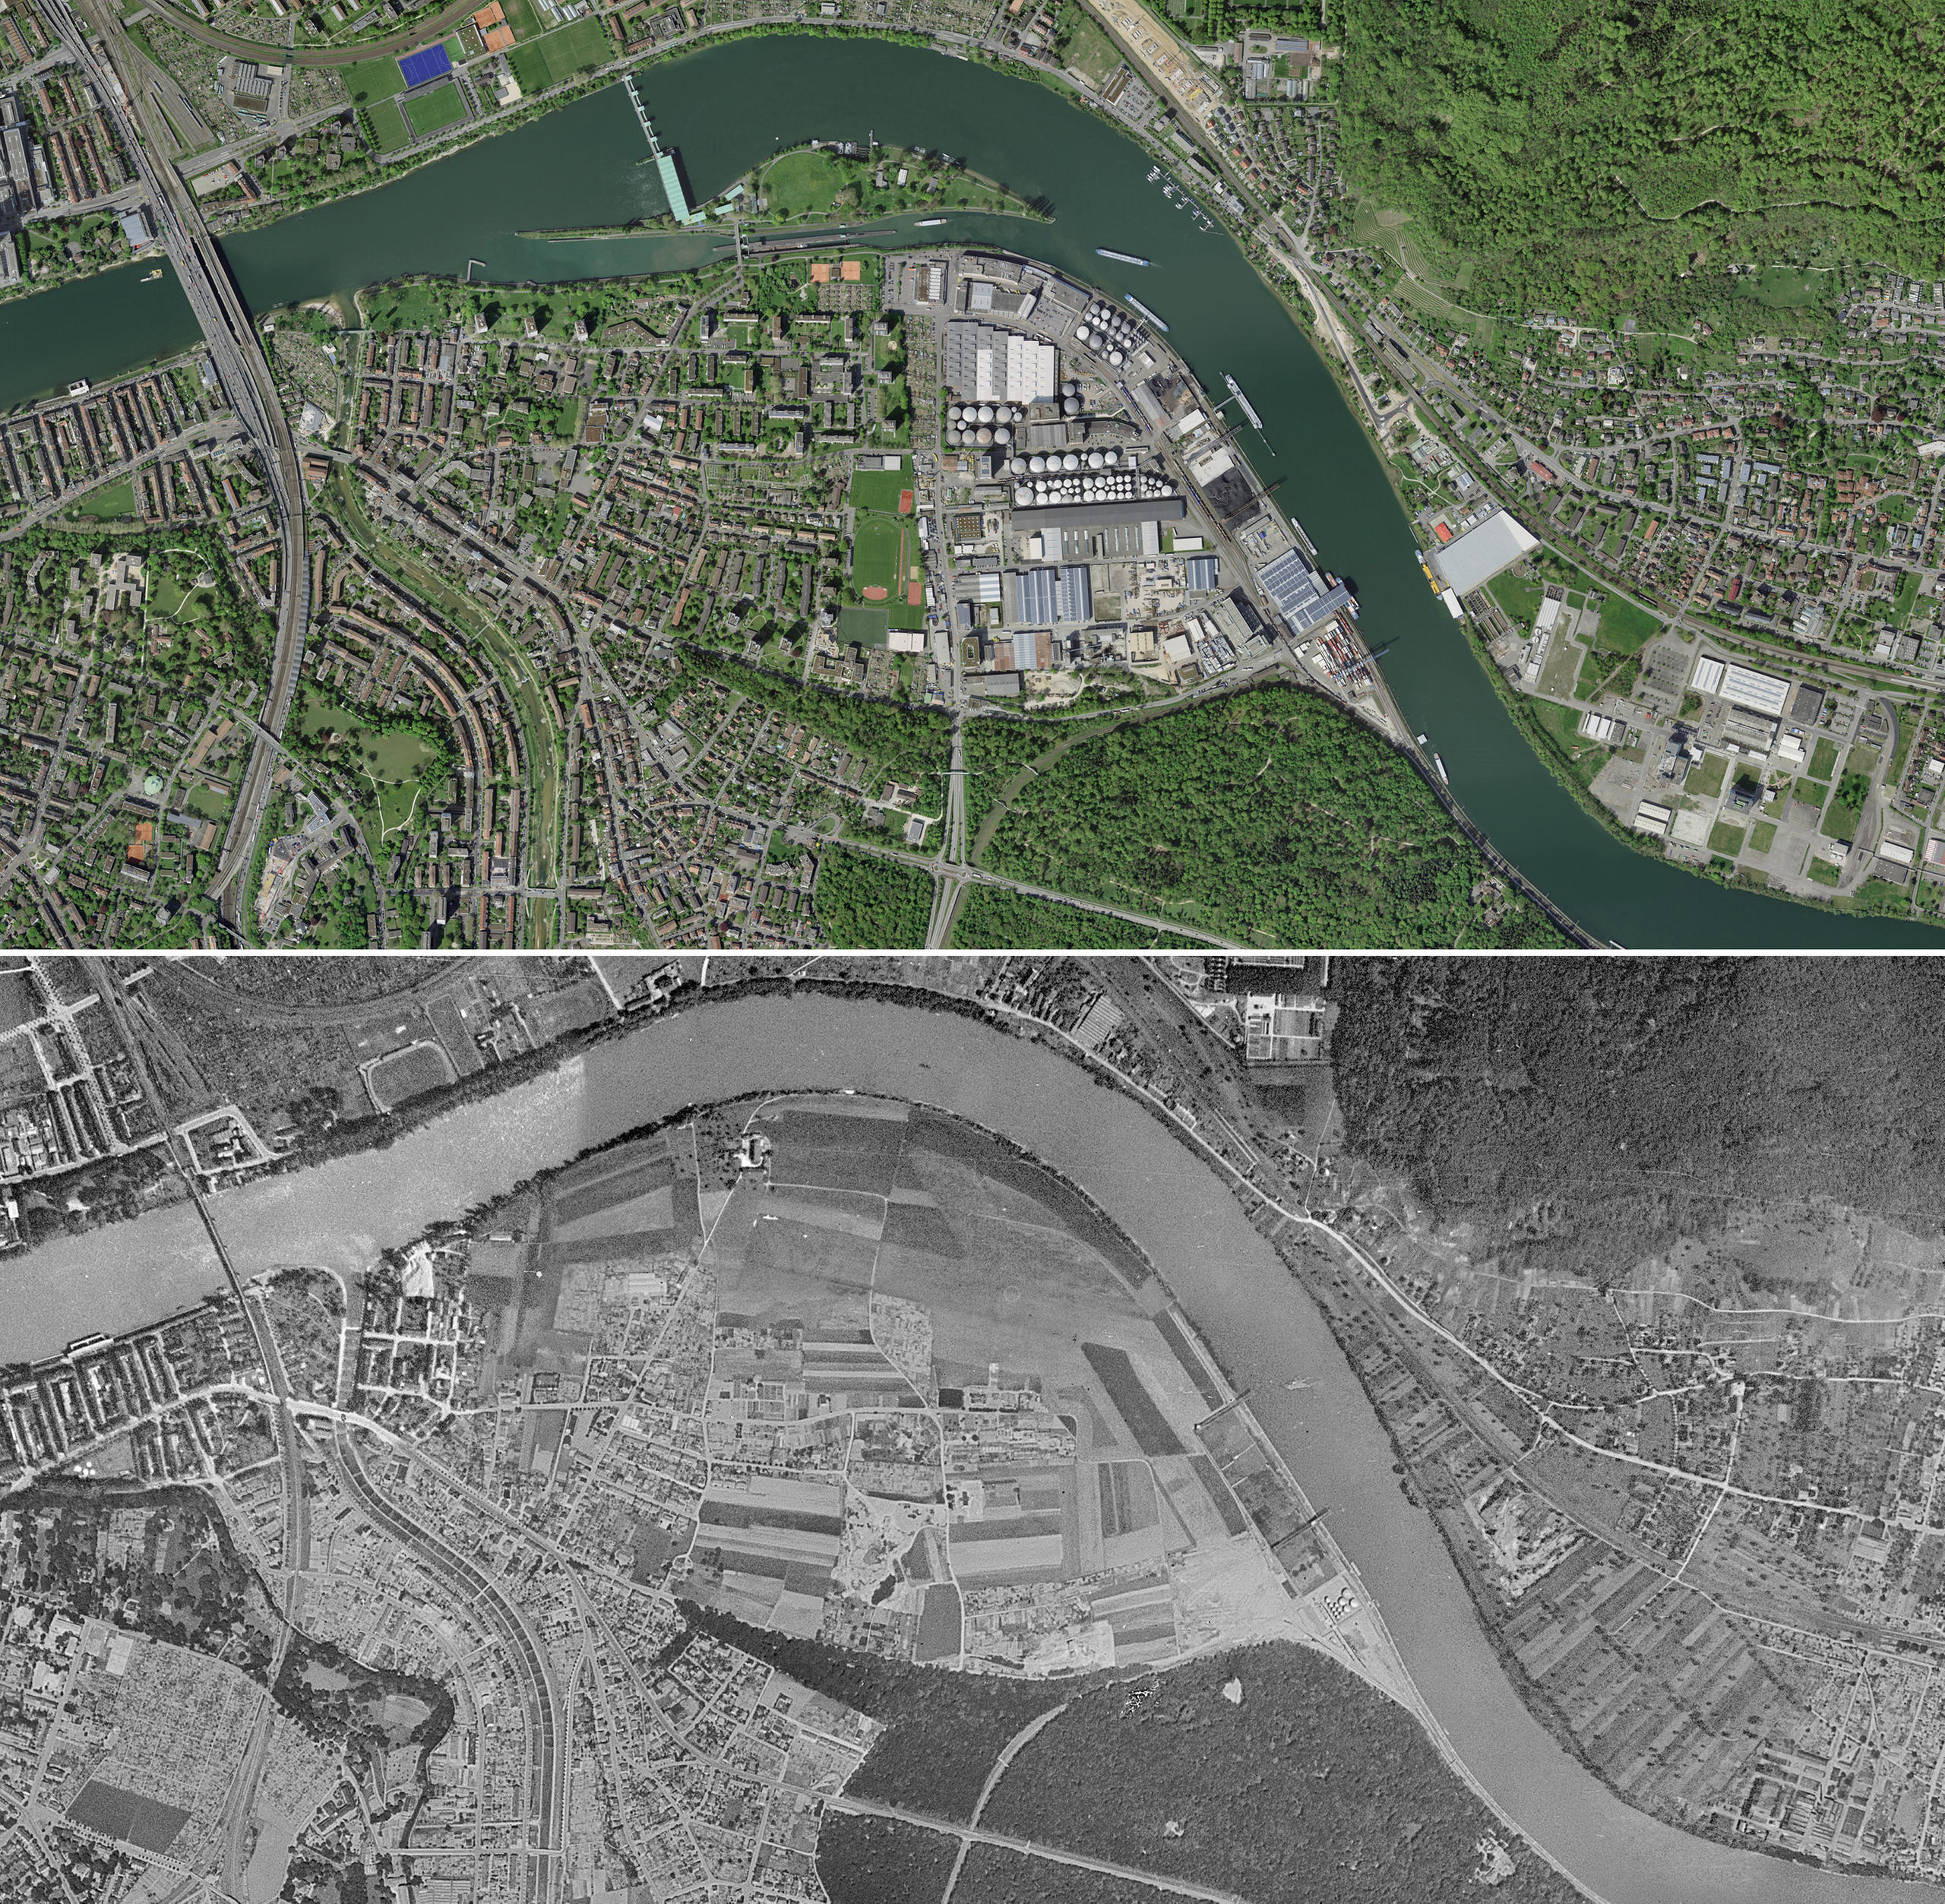 Aerial view of Birsfelden above in 2018 and below in 1946